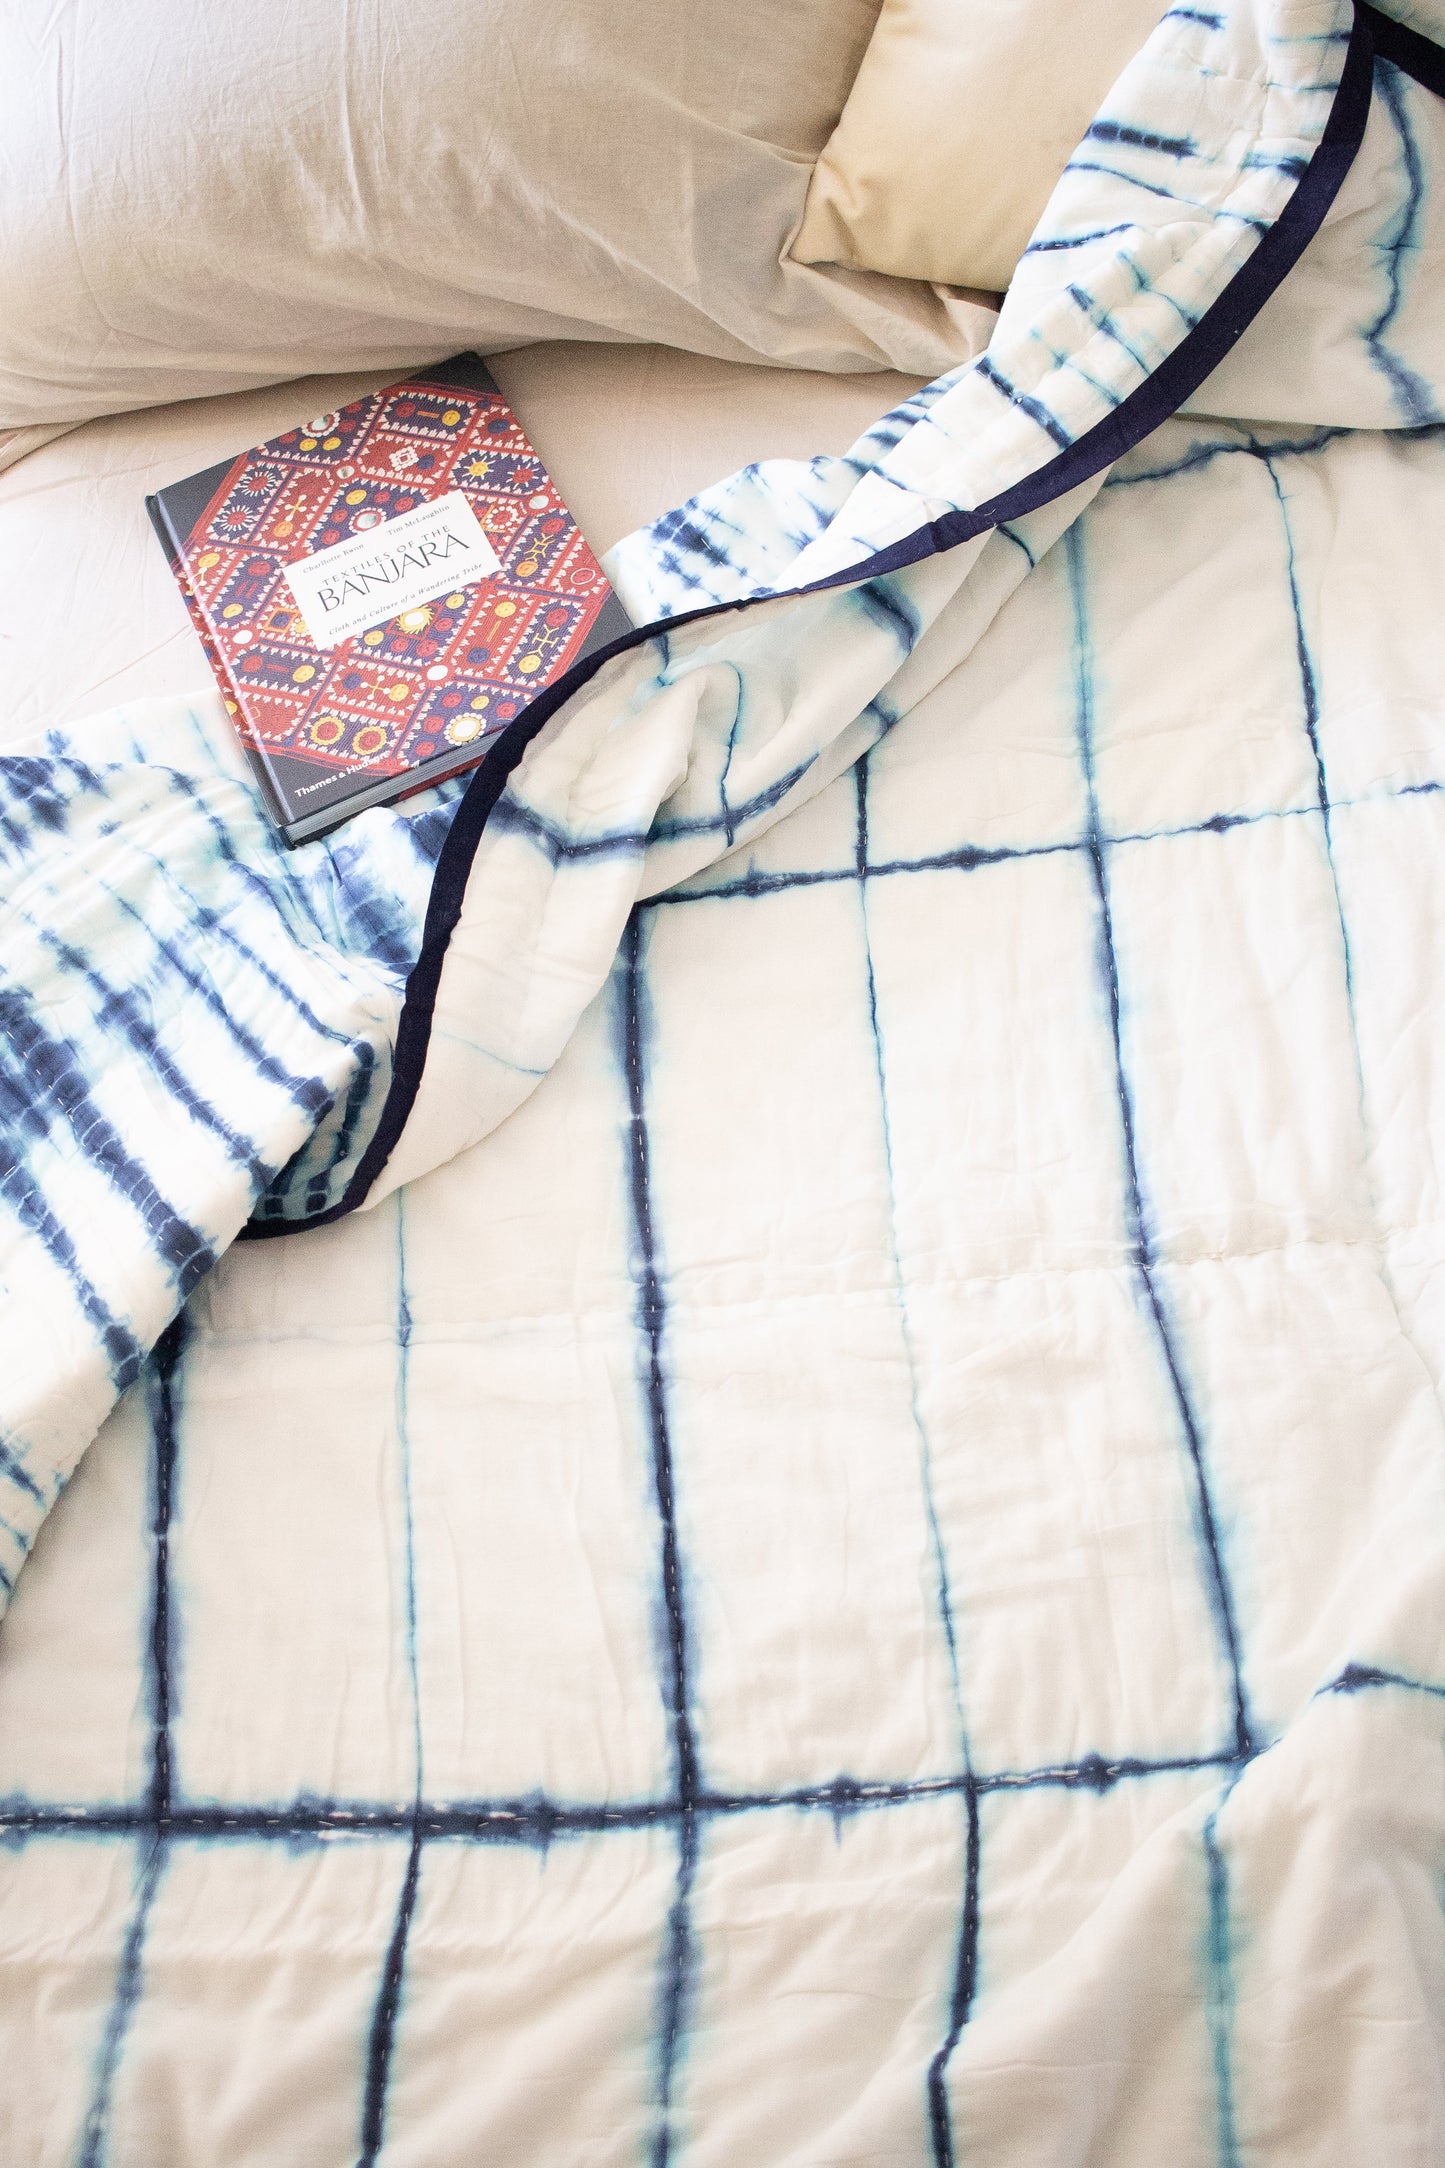 Shibori AC Quilt - Blue Tie and dye quilt - Indigo shibori quilt - Single and Queen size quilt